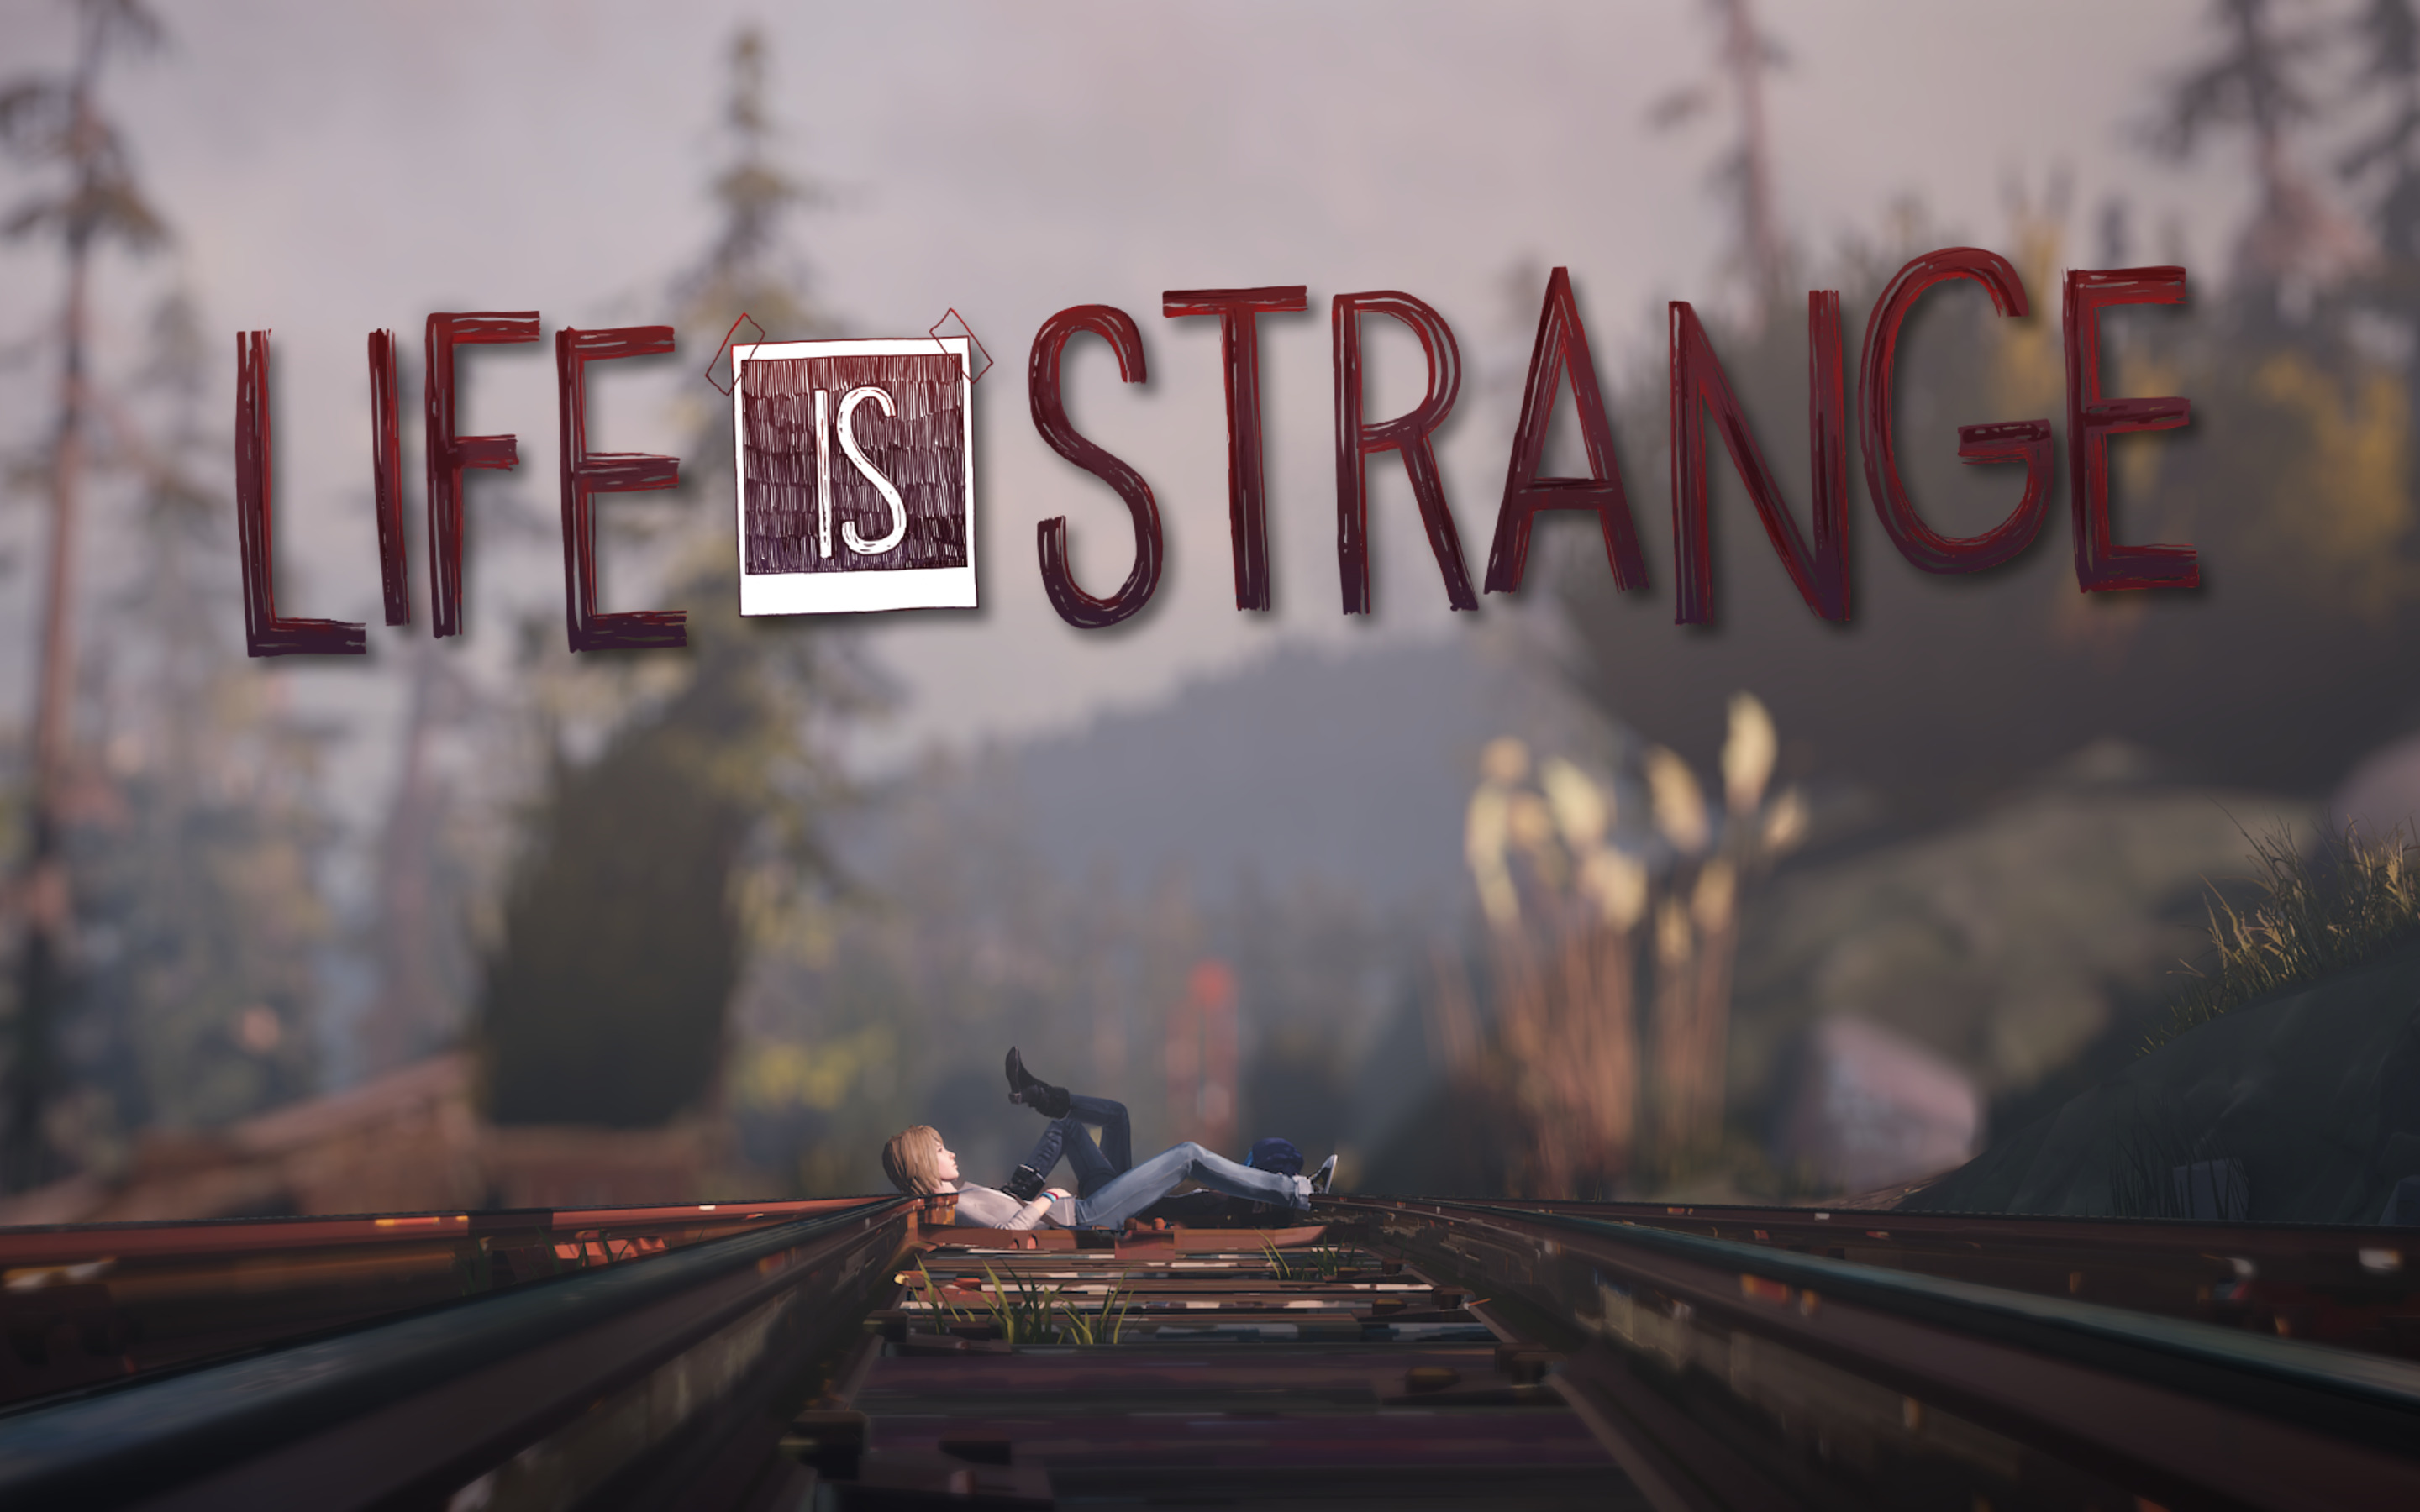 Life is life download. Life is Strange 1 Макс коулфилд. Life is Strange рельсы. Life is Strange обои. Life is Strange обои на ПК.